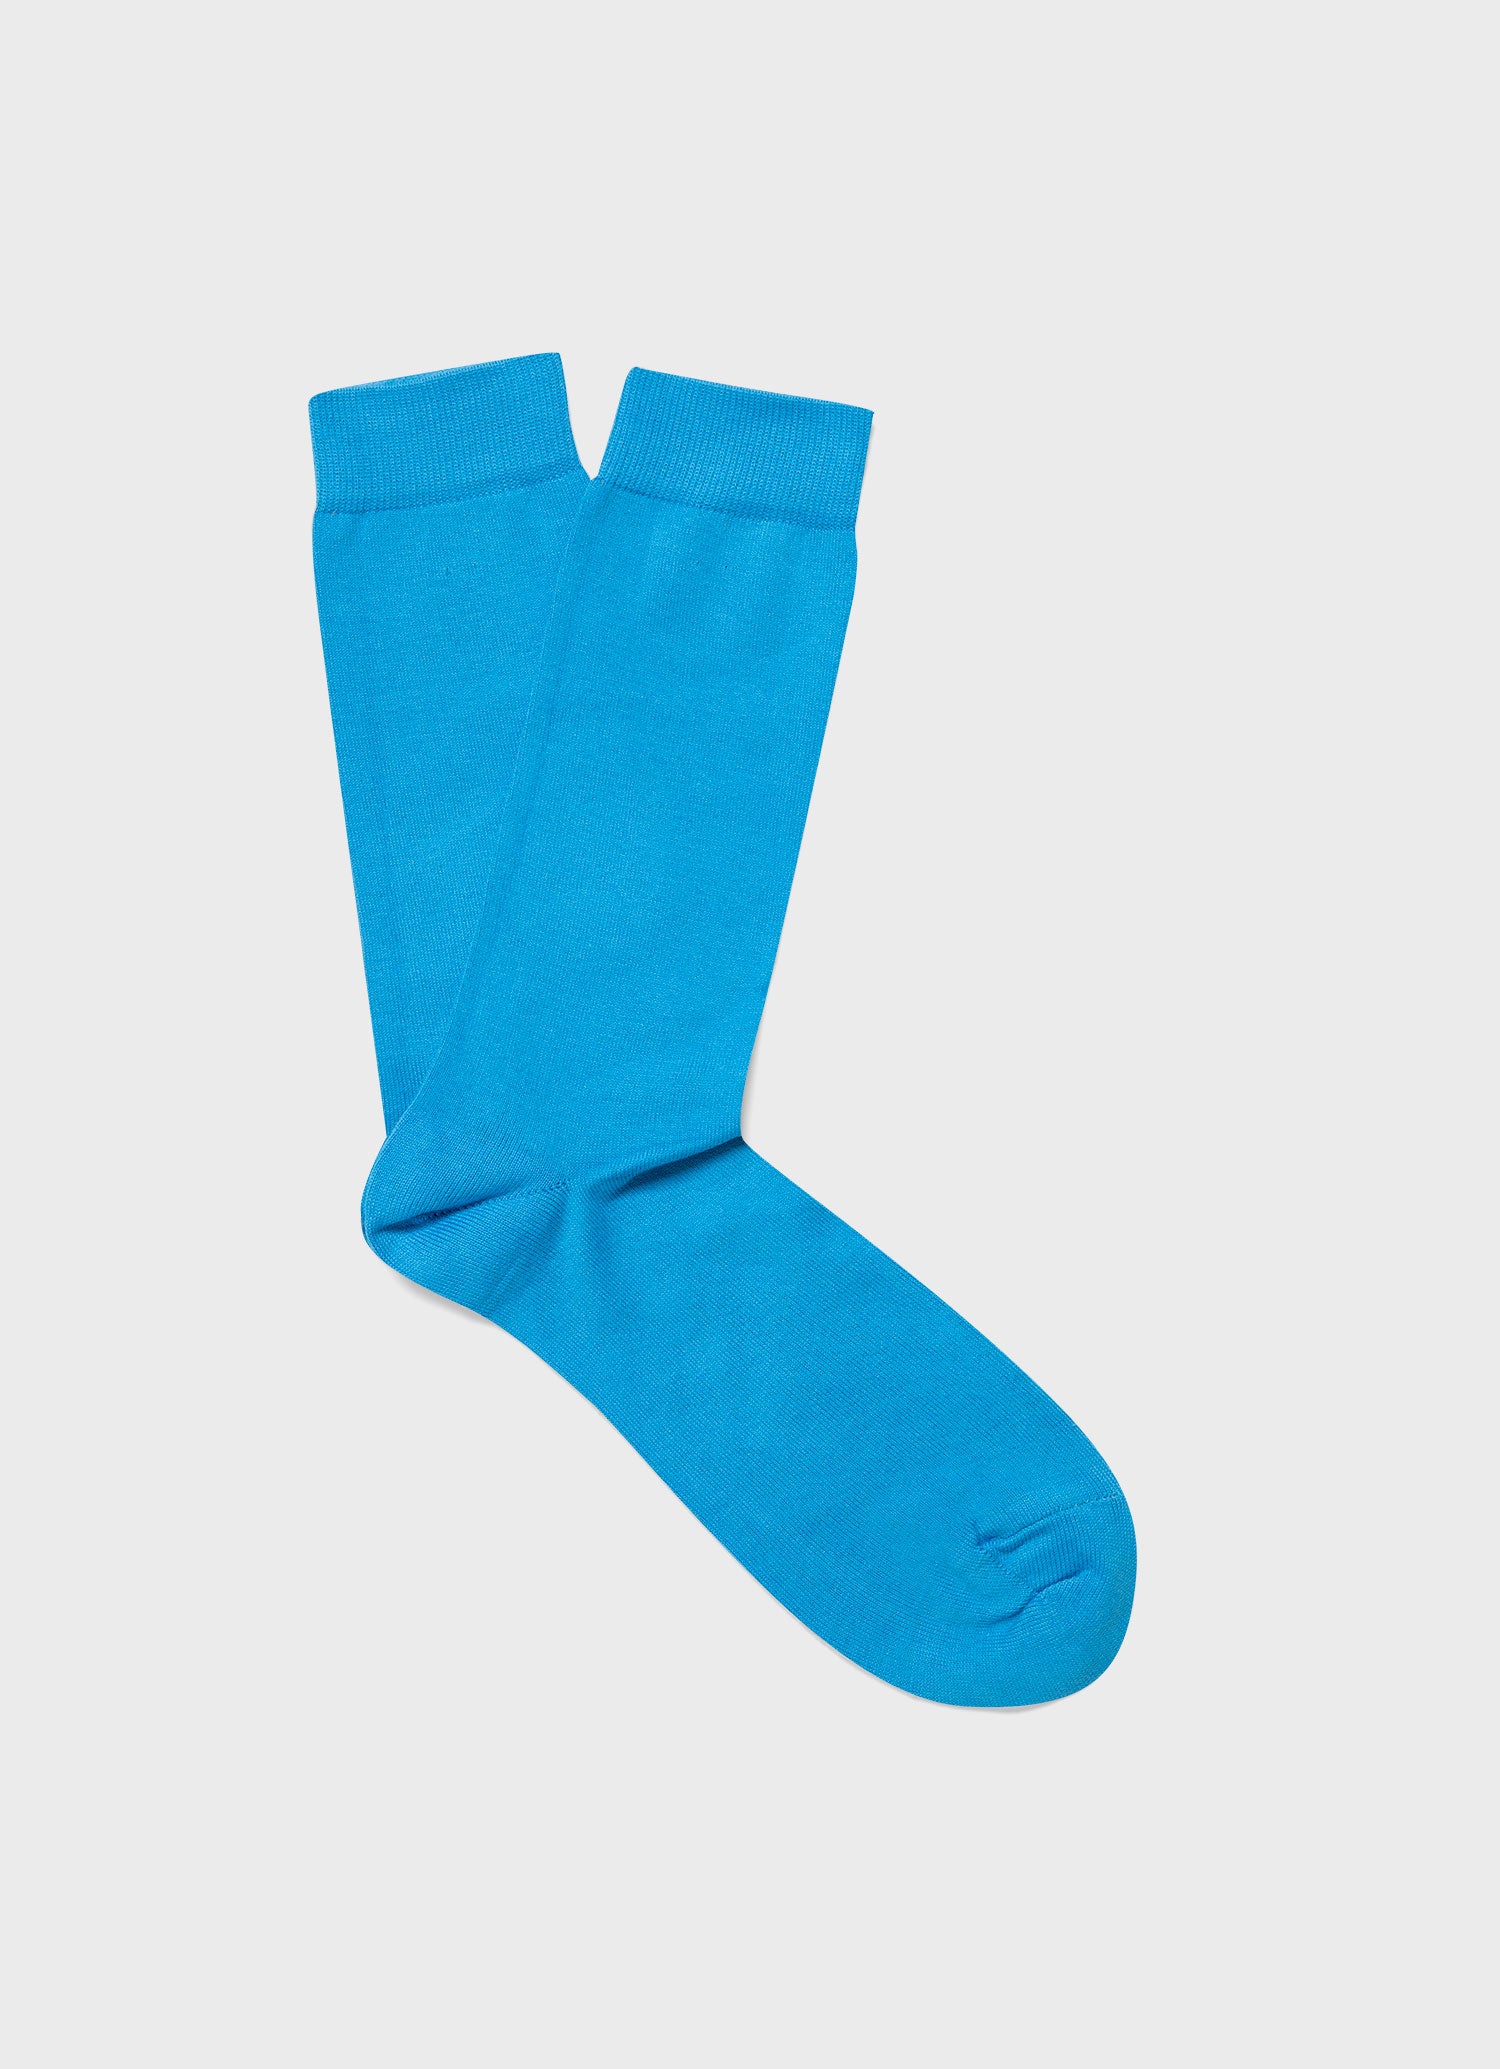 Men's Cotton Sock in Turquoise